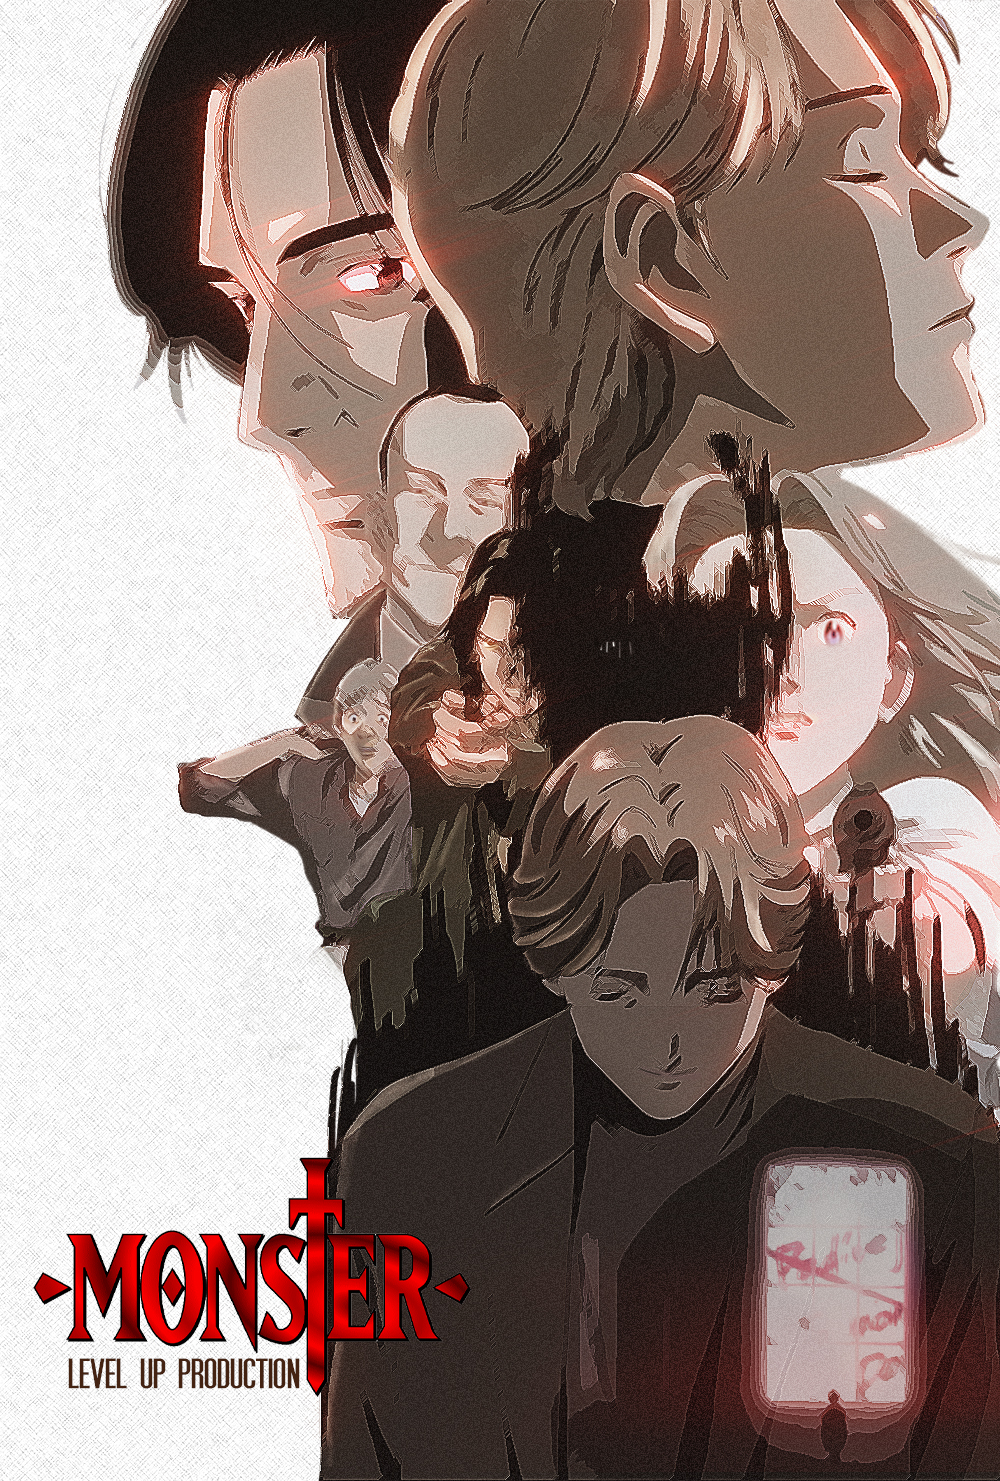 Monster Anime Poster by LEVELUPPRODUCTION on DeviantArt